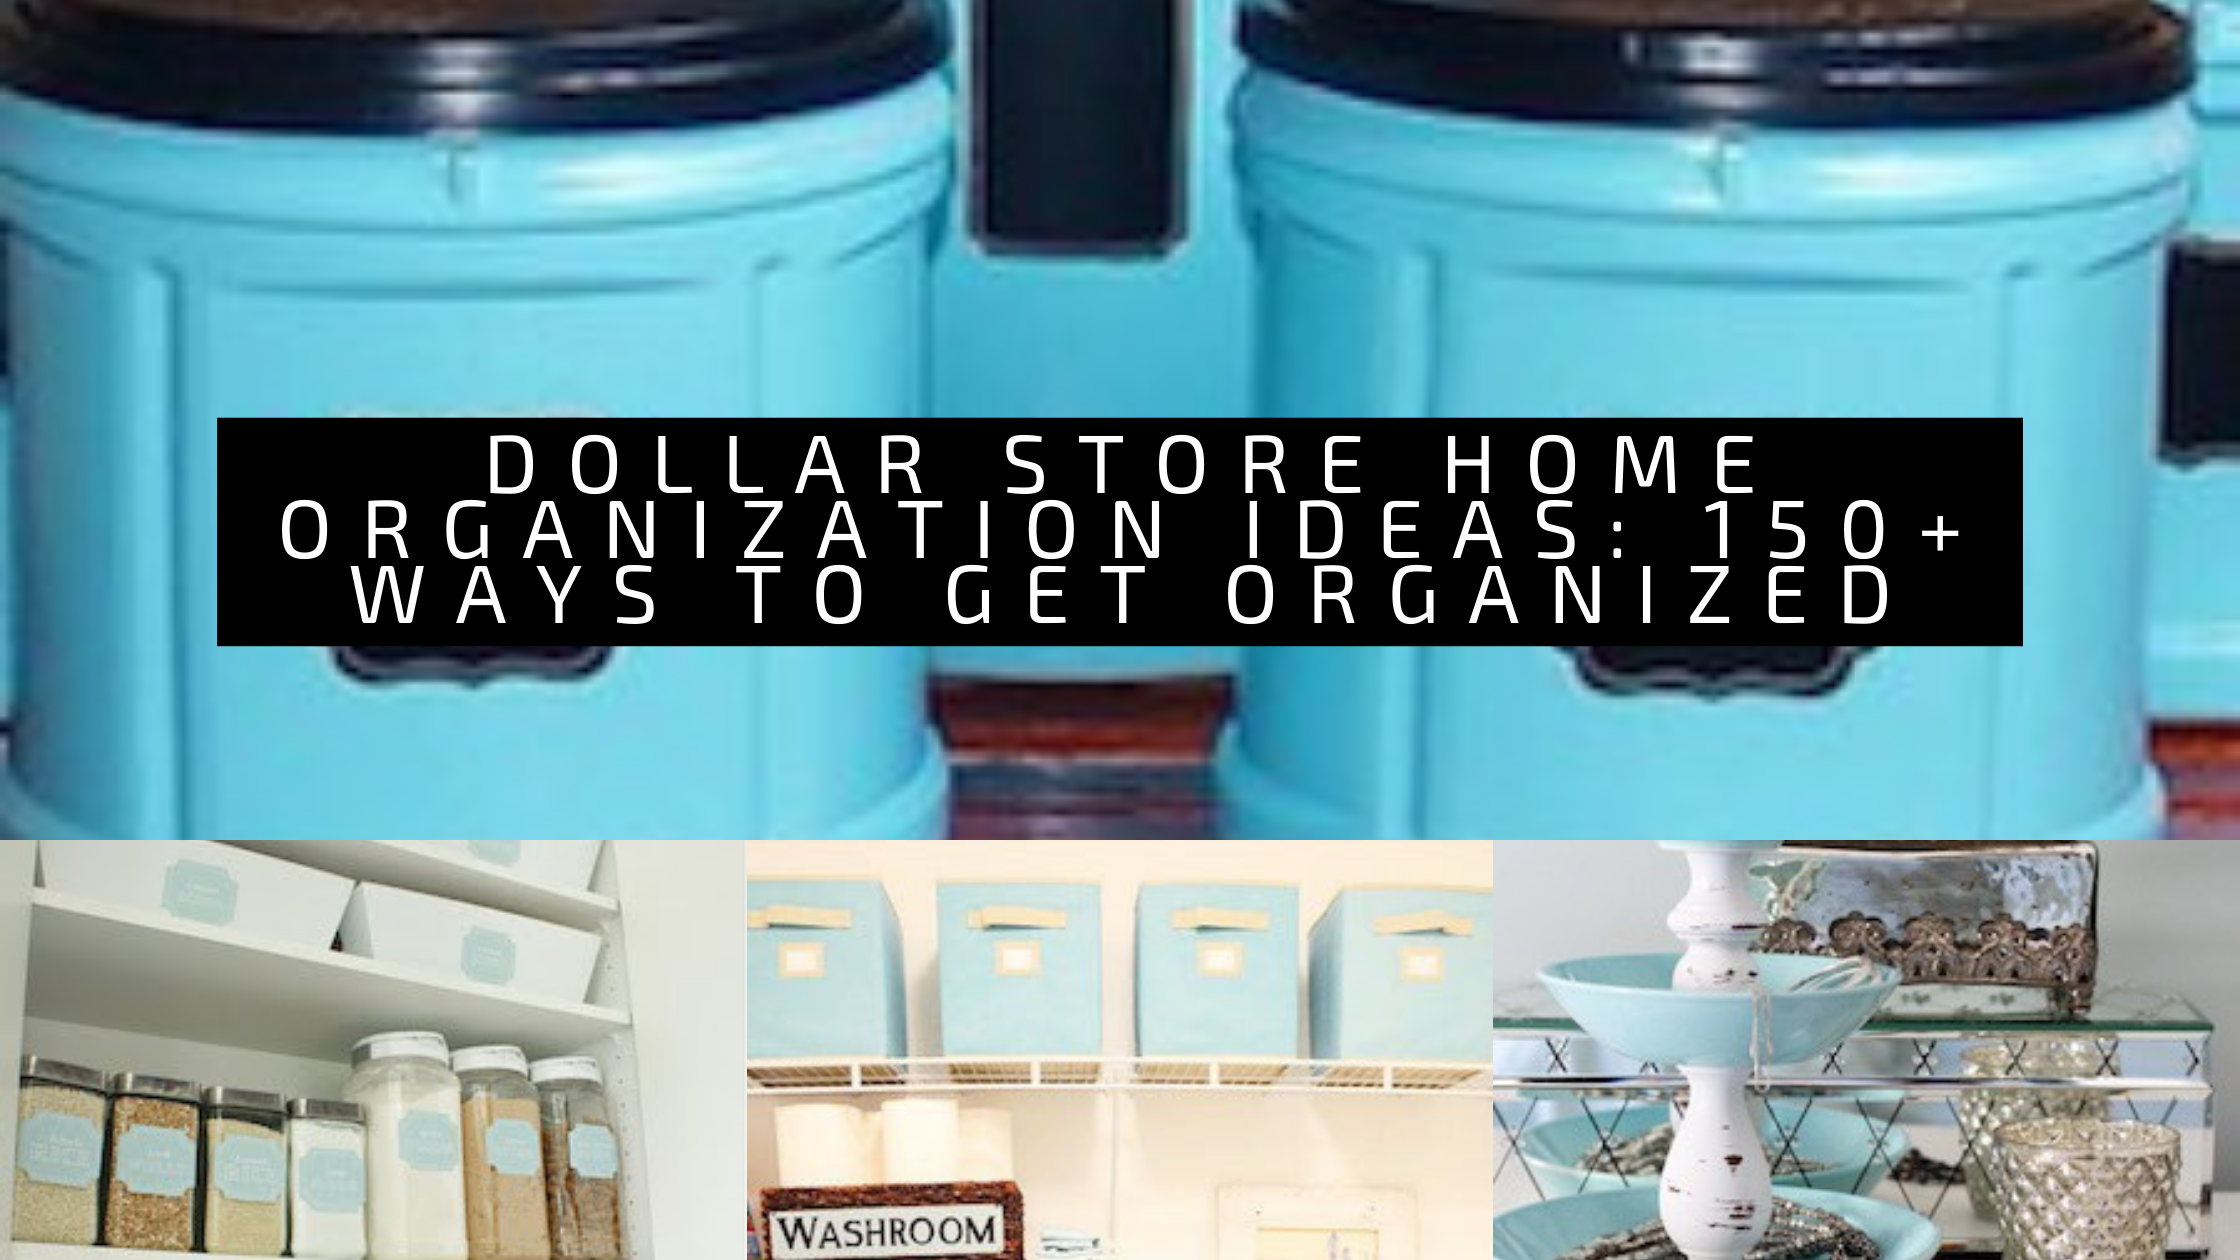 Dollar Store Home Organization Ideas: 150+ Ways to Get Organized 83